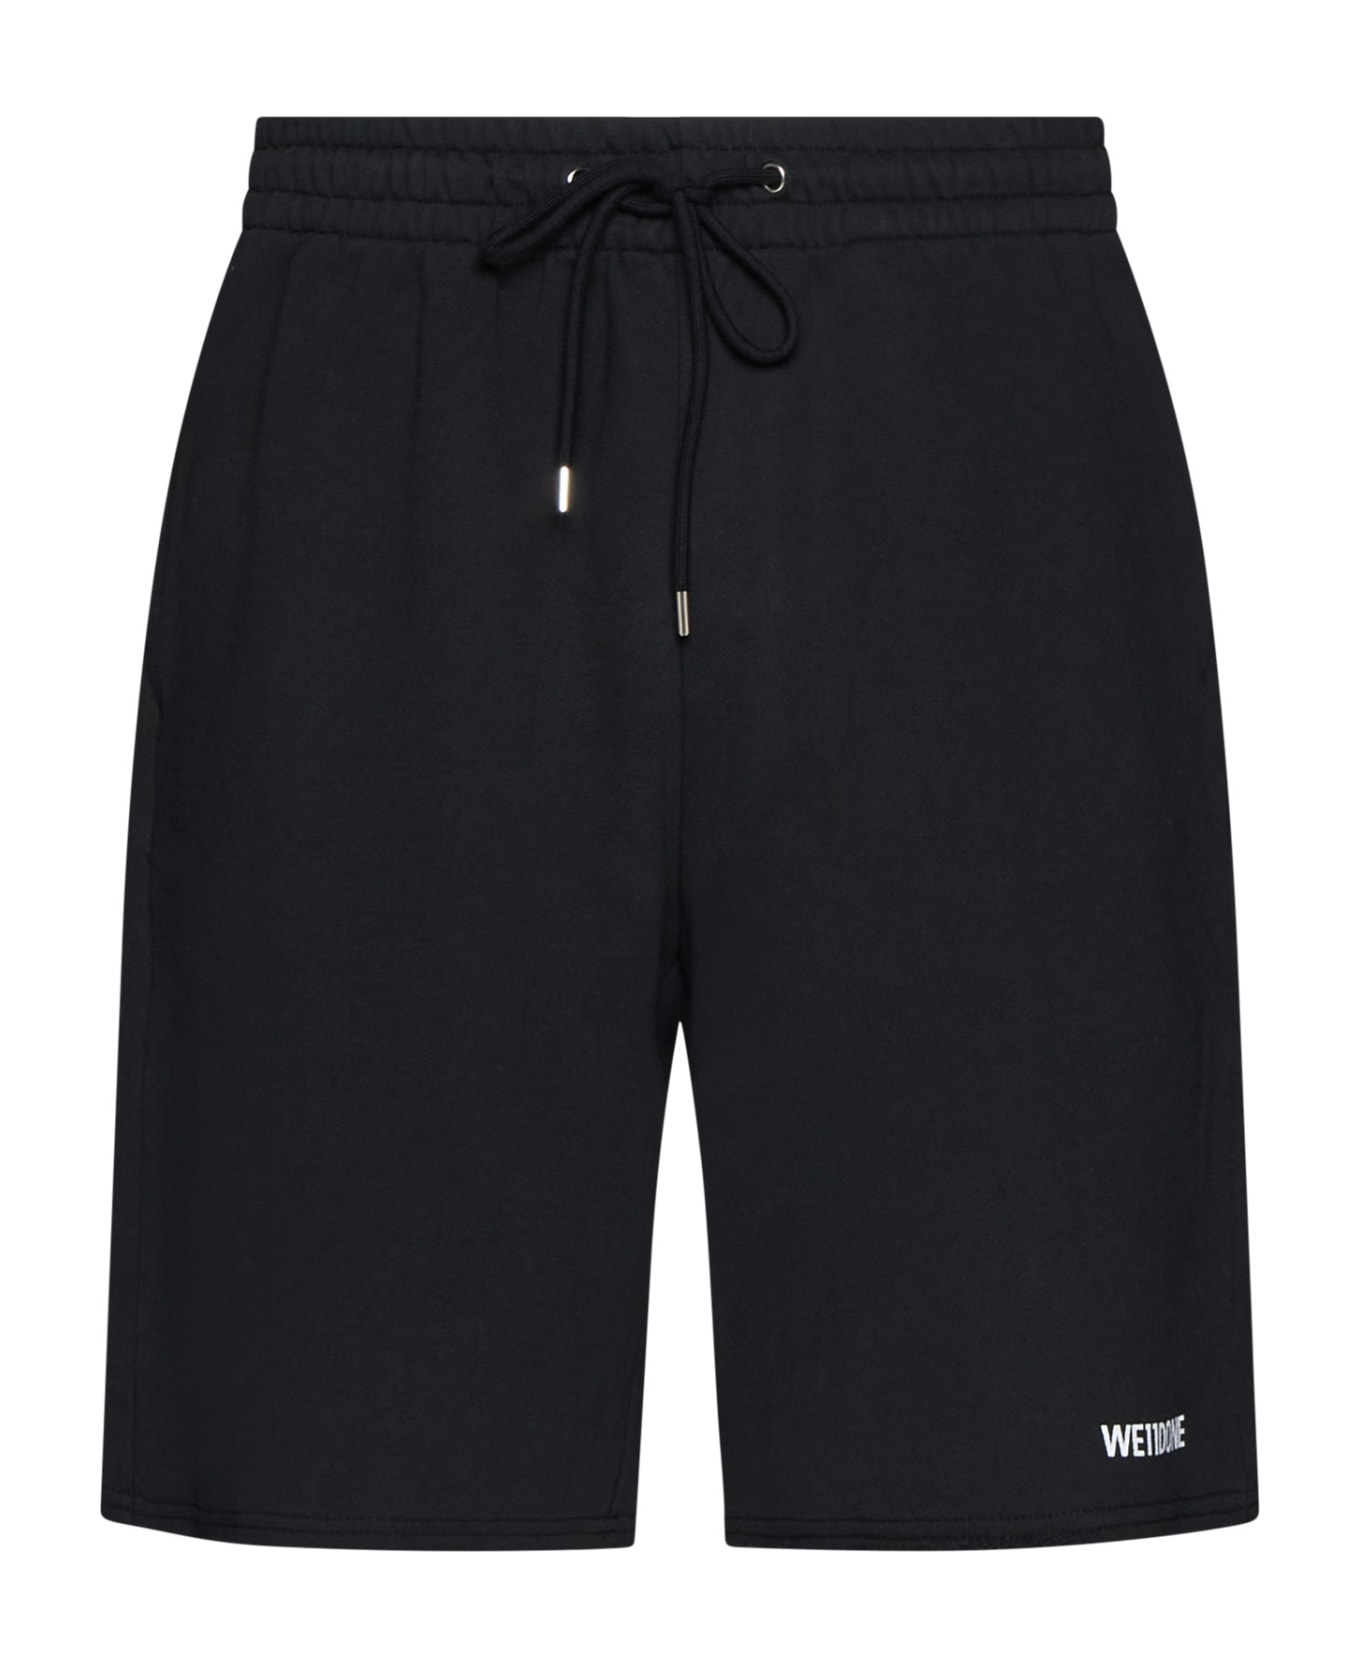 WE11 DONE Shorts - Black ショートパンツ